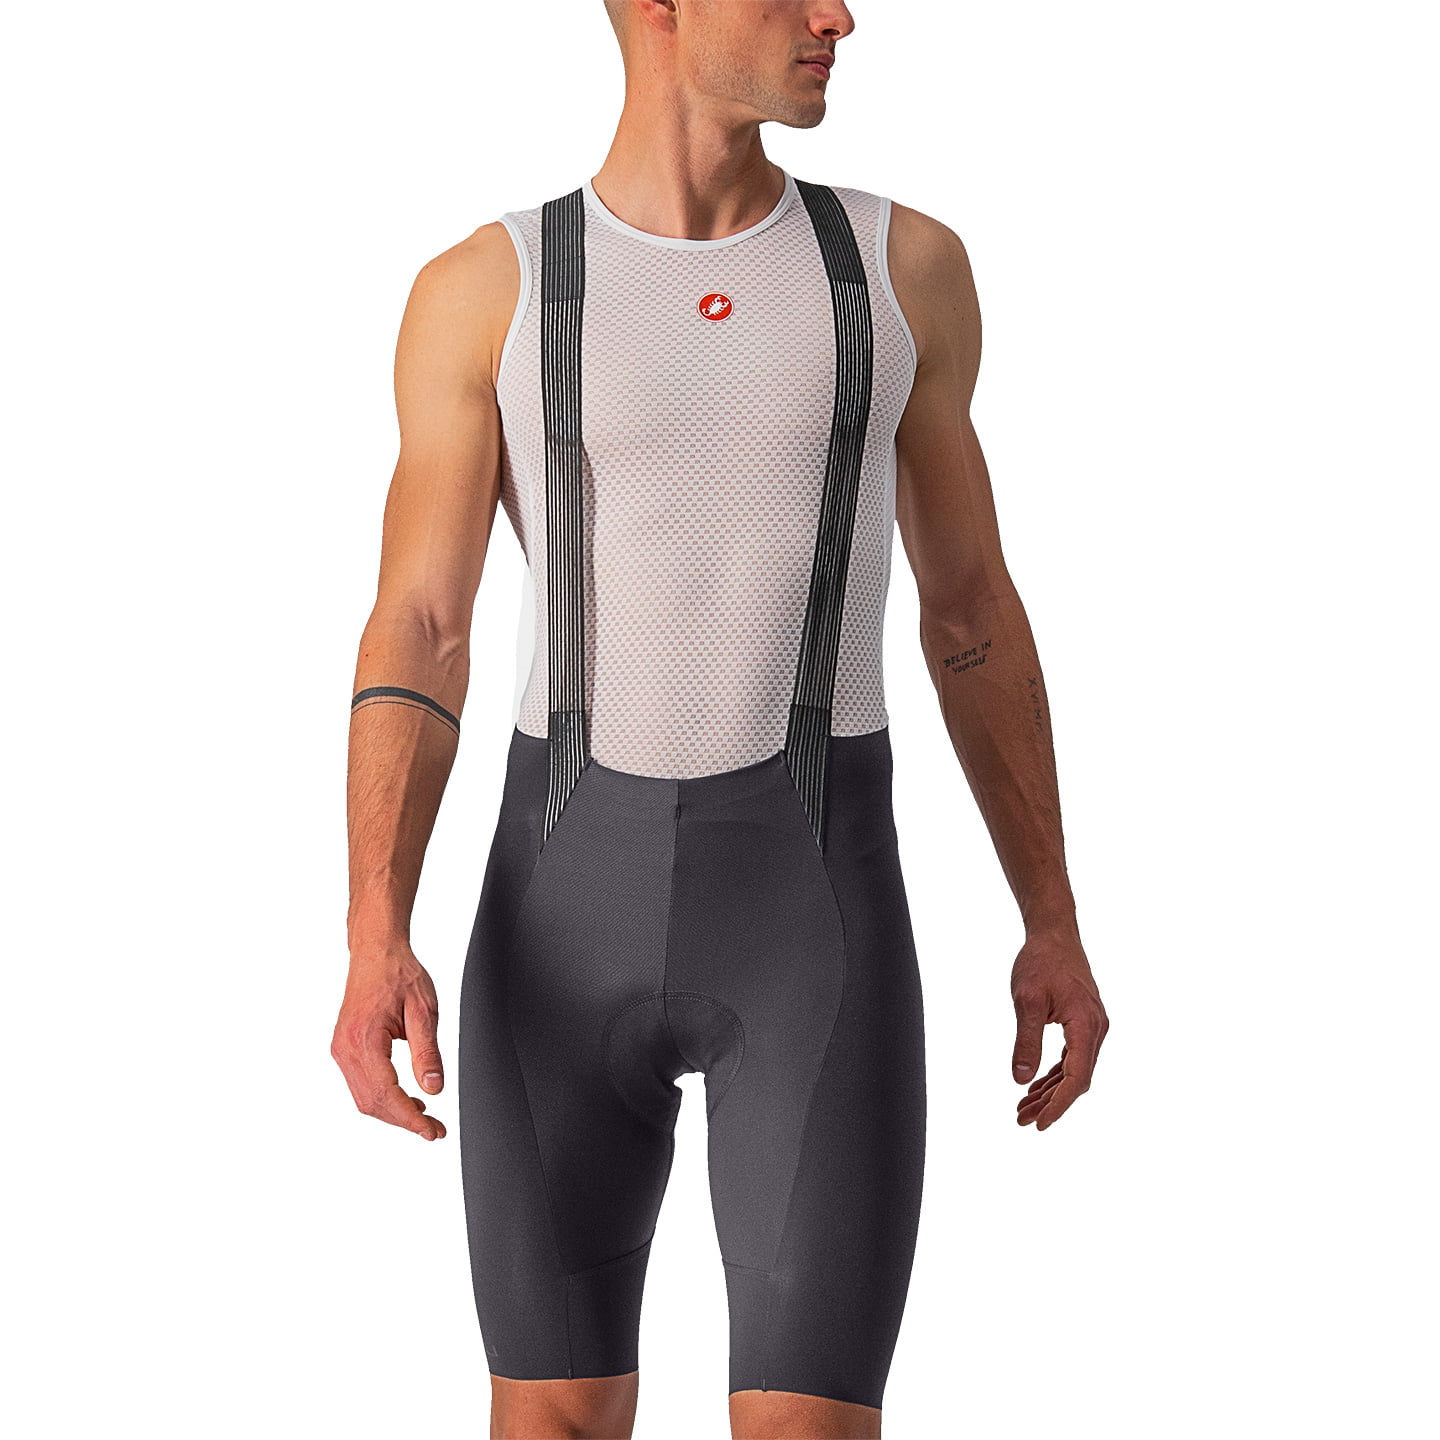 CASTELLI Free Aero RC Bib Shorts Bib Shorts, for men, size XL, Cycle shorts, Cycling clothing